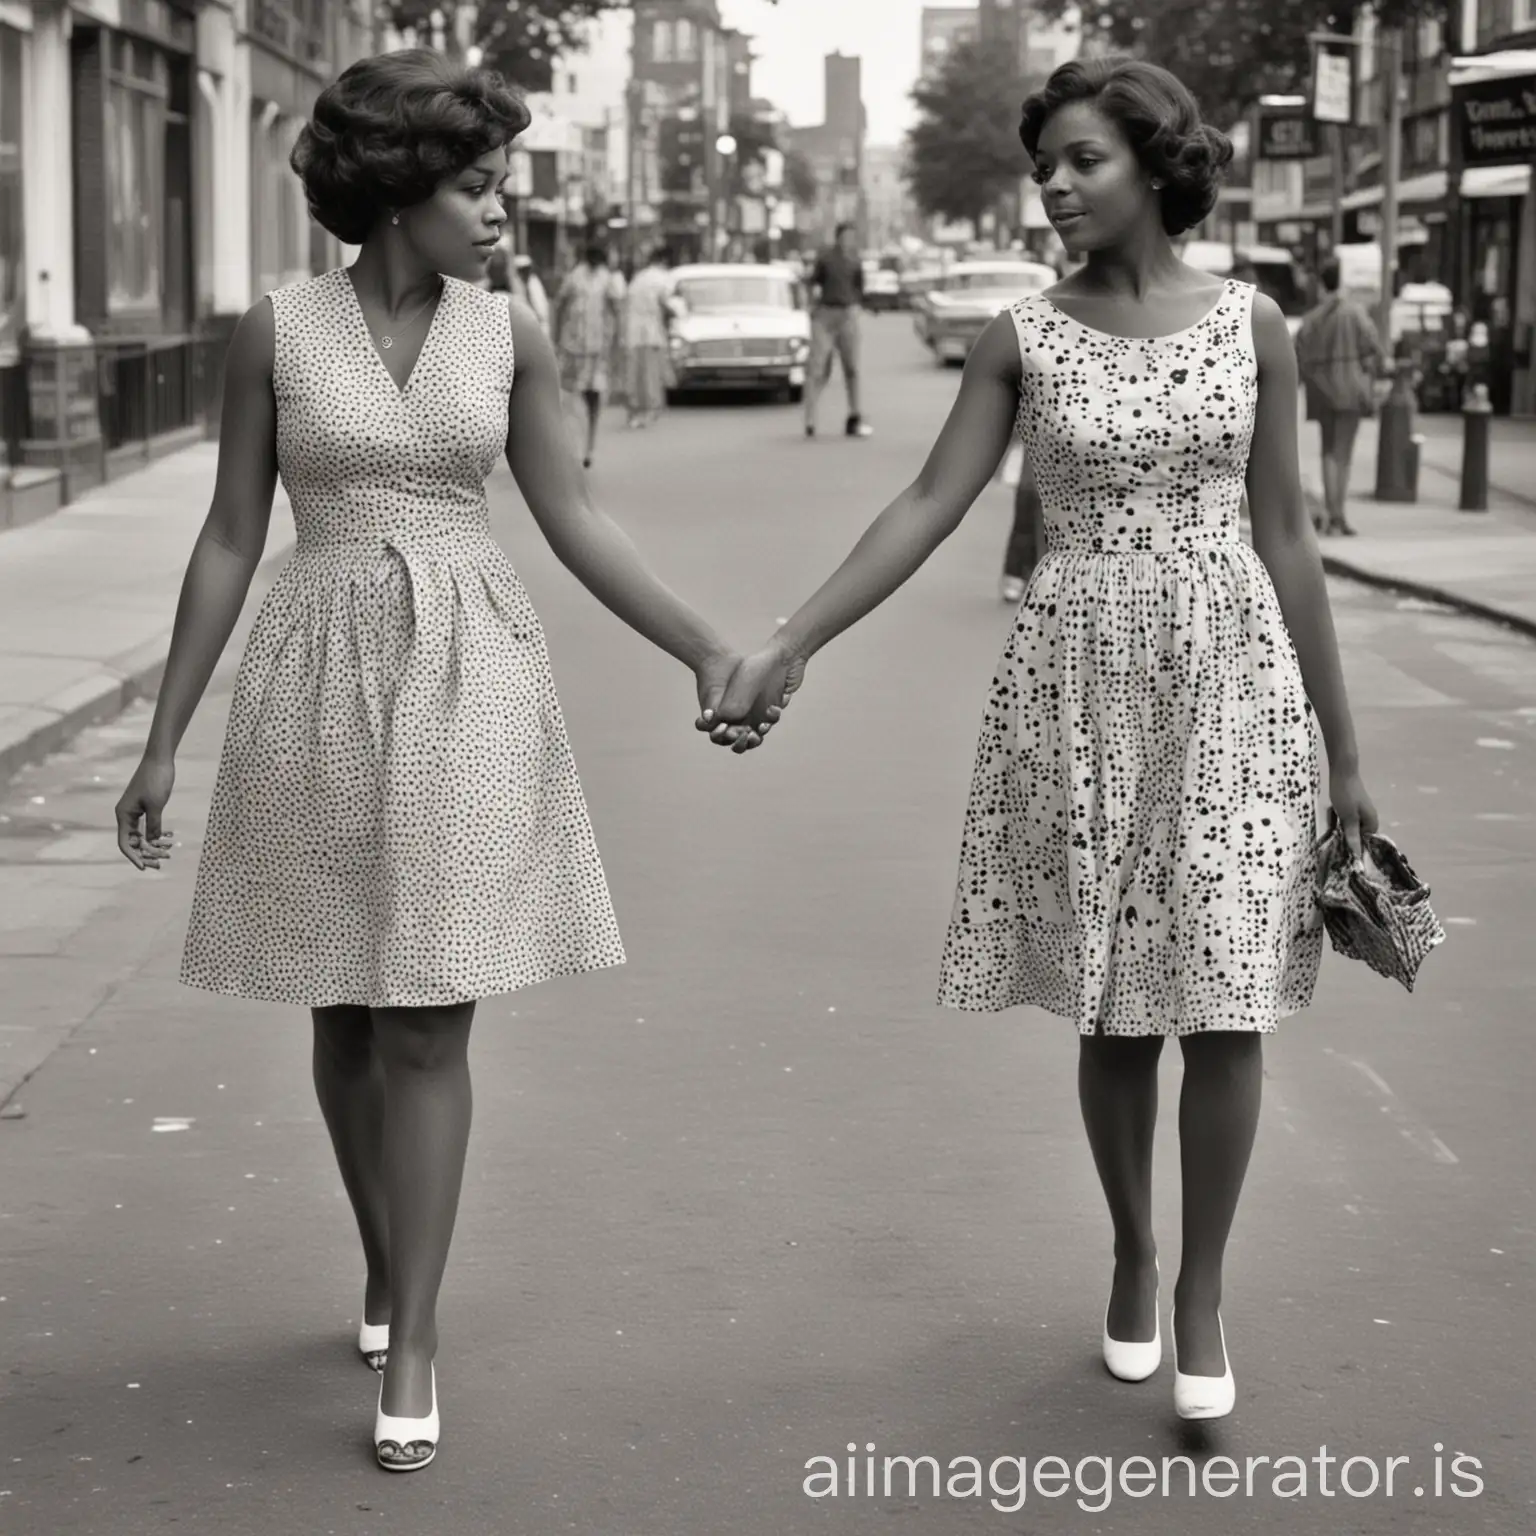 Two-Black-Women-Holding-Hands-in-1960s-Urban-Scene